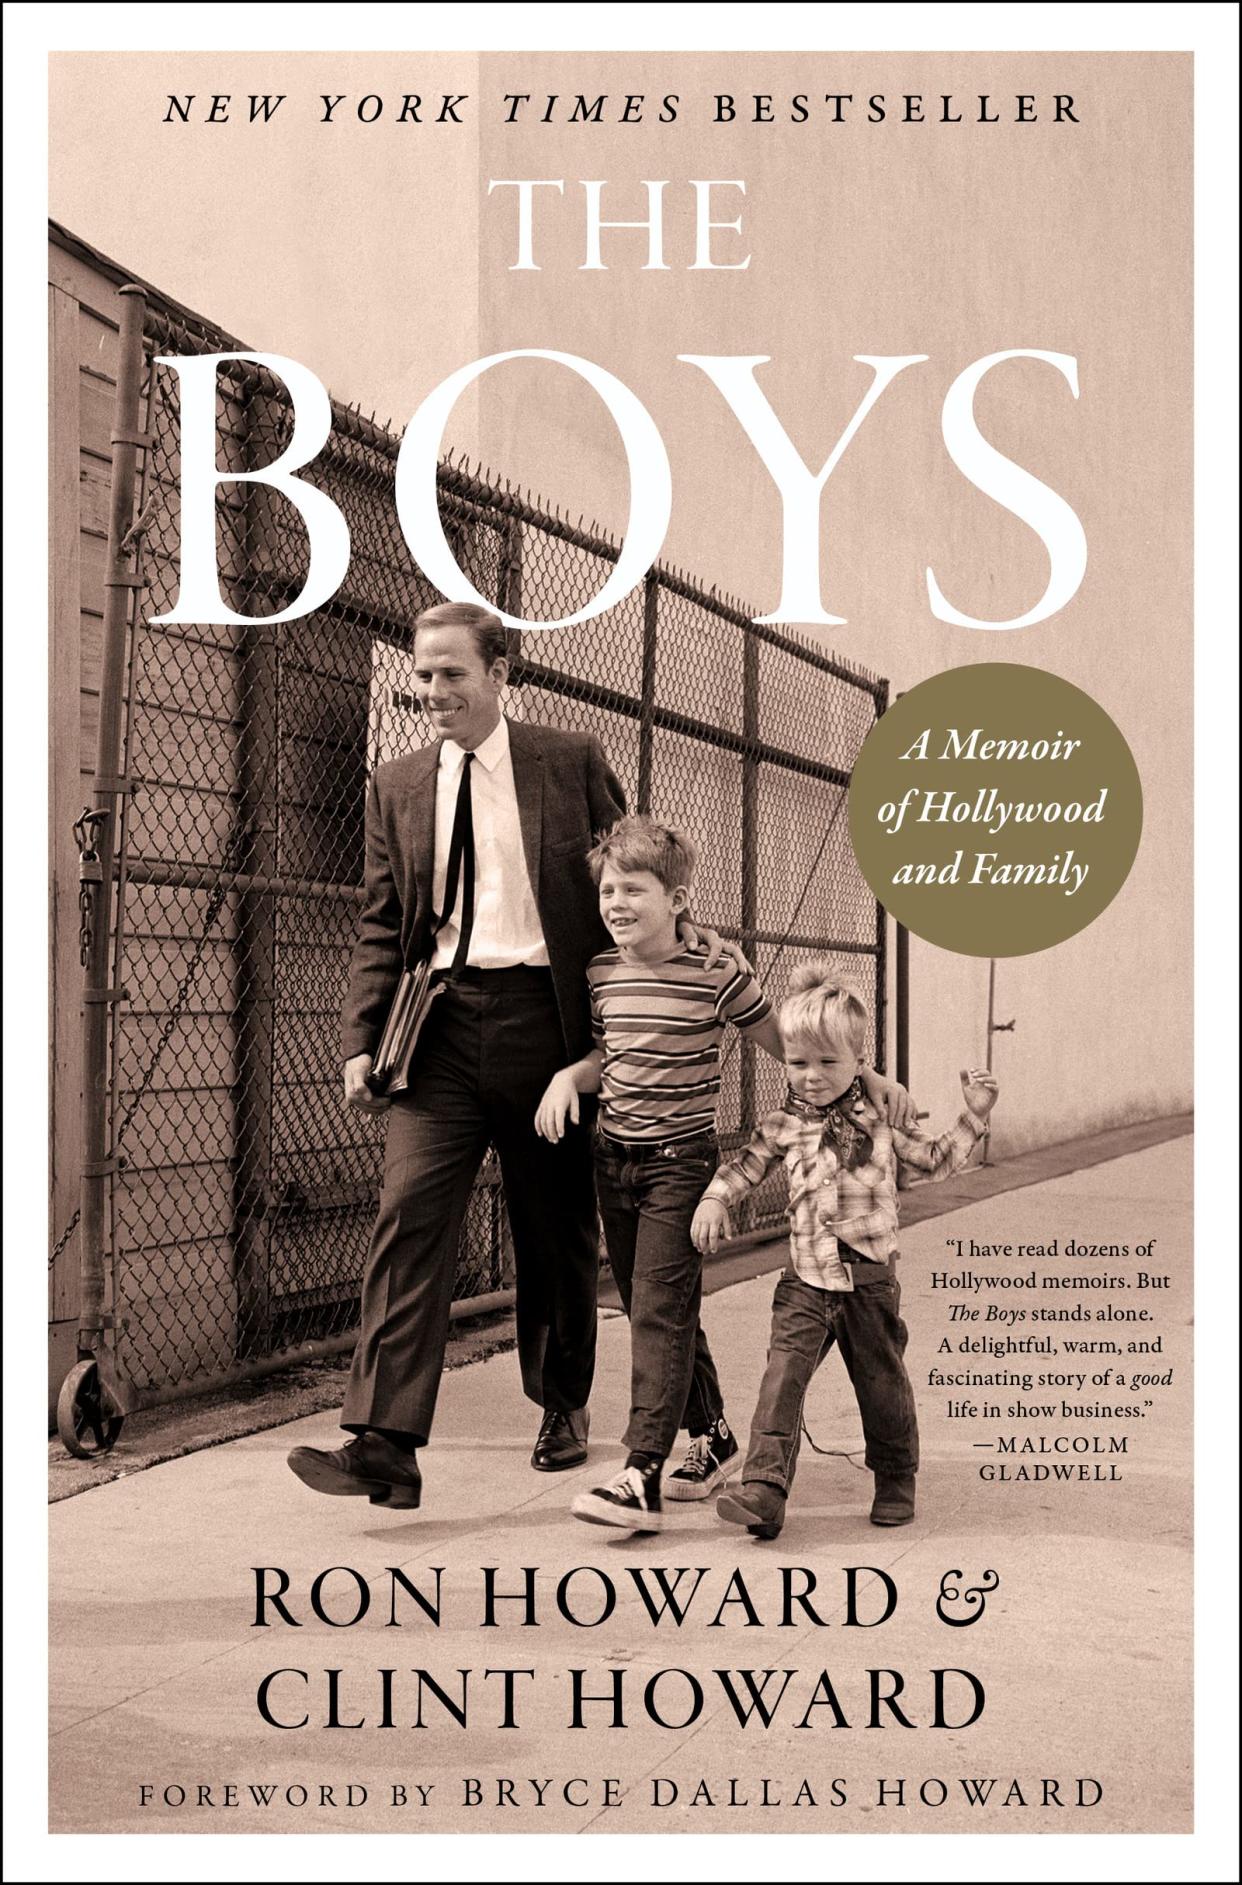 "The Boys" by Ron Howard and Clint Howard